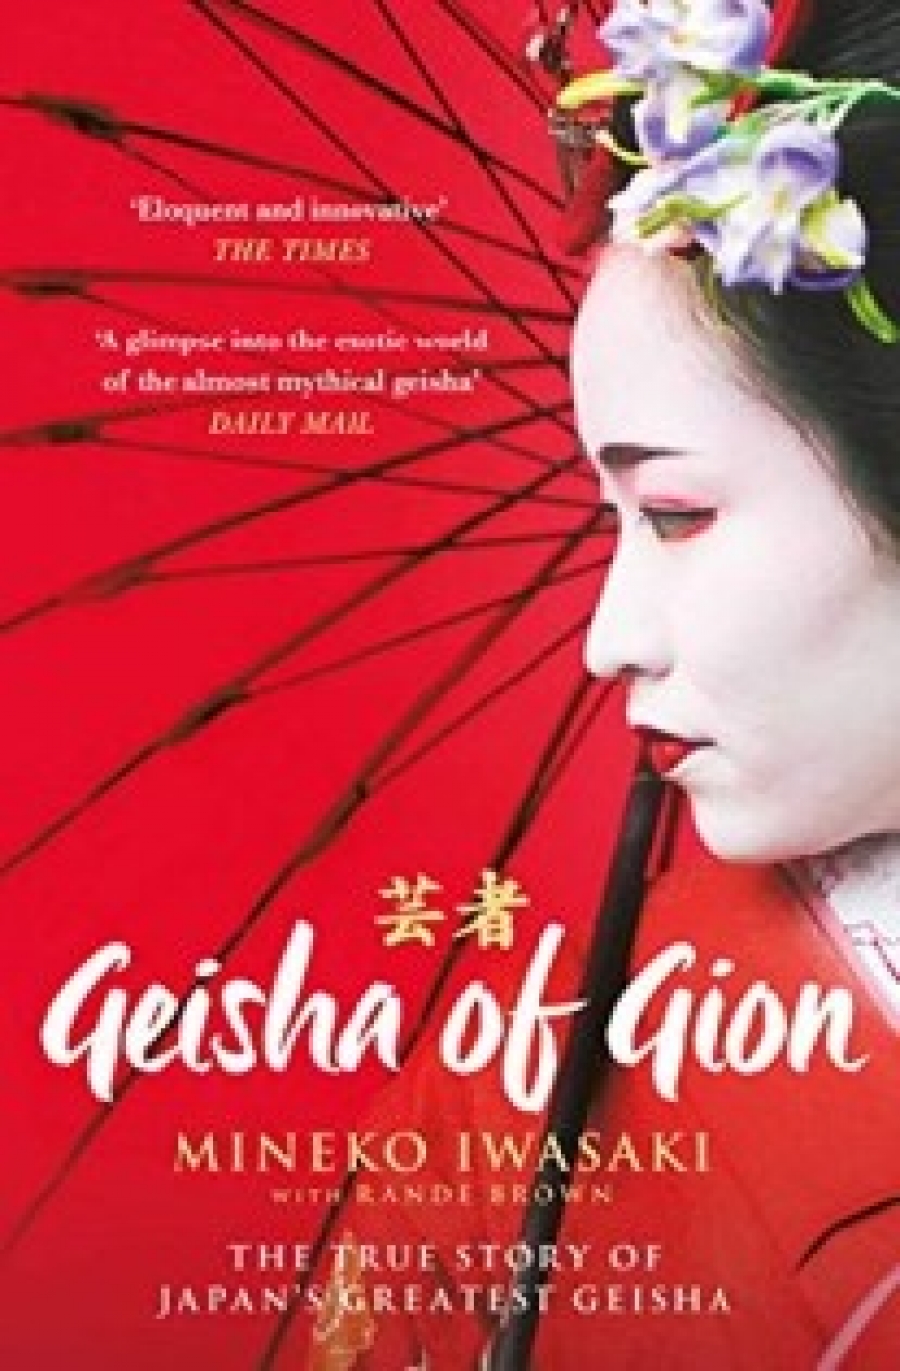 Iwasaki, Mineko Brown, Rande Geisha of gion 